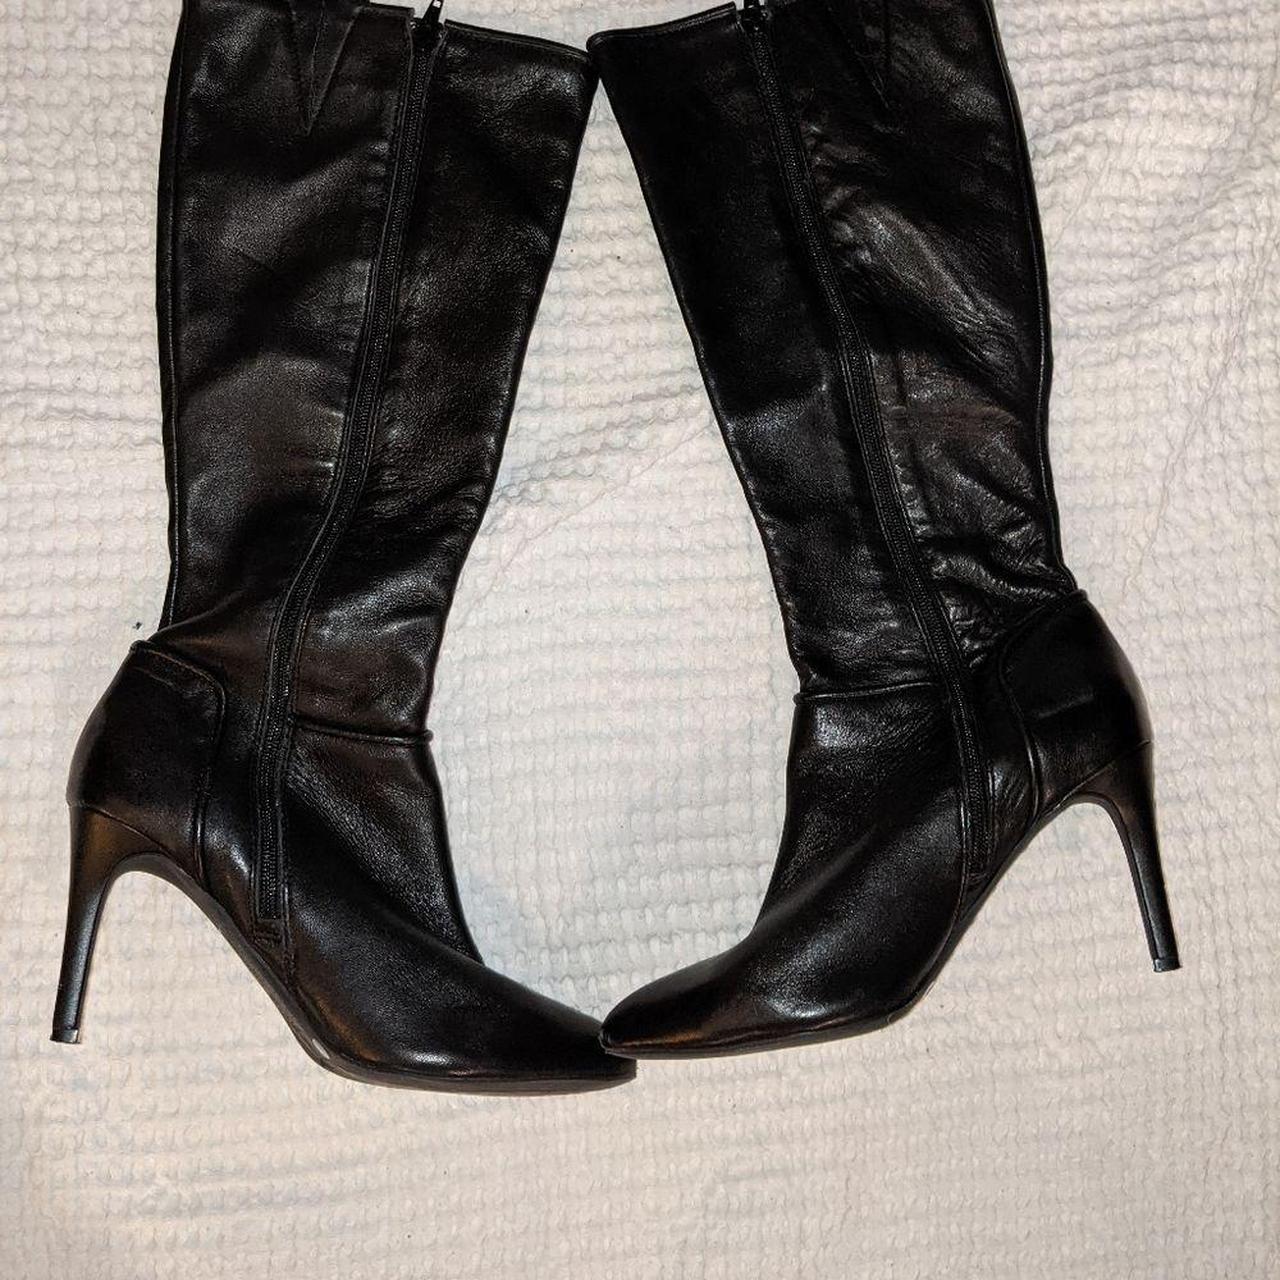 Antonio Melani Genuine Leather High Heel Boots Size... - Depop